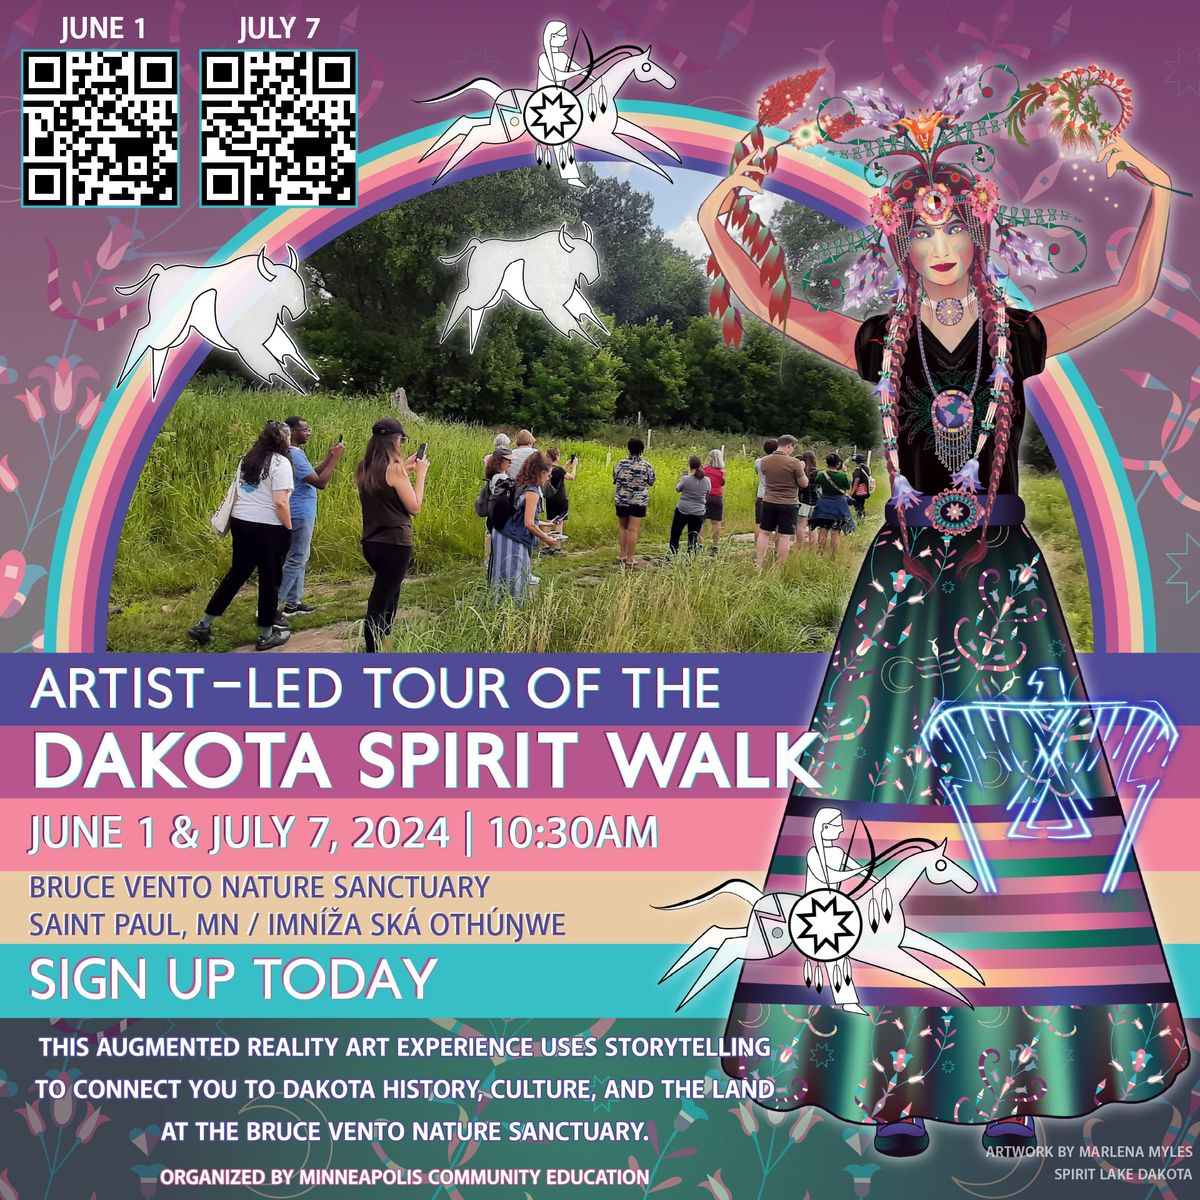 Dakota Spirit Walk - Guided Tour using Augmented Reality